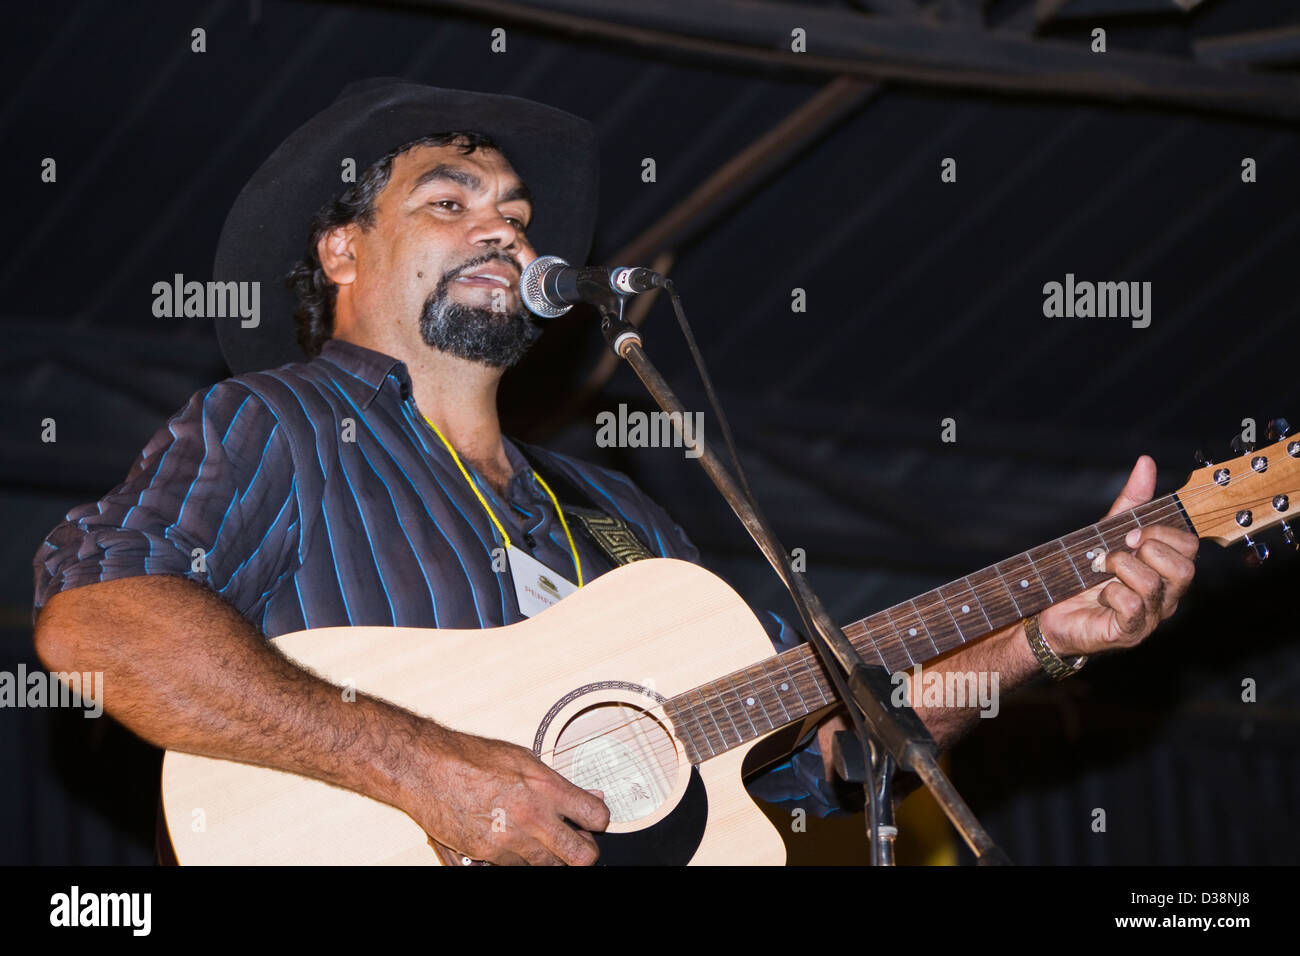 Peter Brandy, 2009 Indigenous Music Artist of the Year for Western Australia, at the Barramundi Concert, Australia Stock Photo